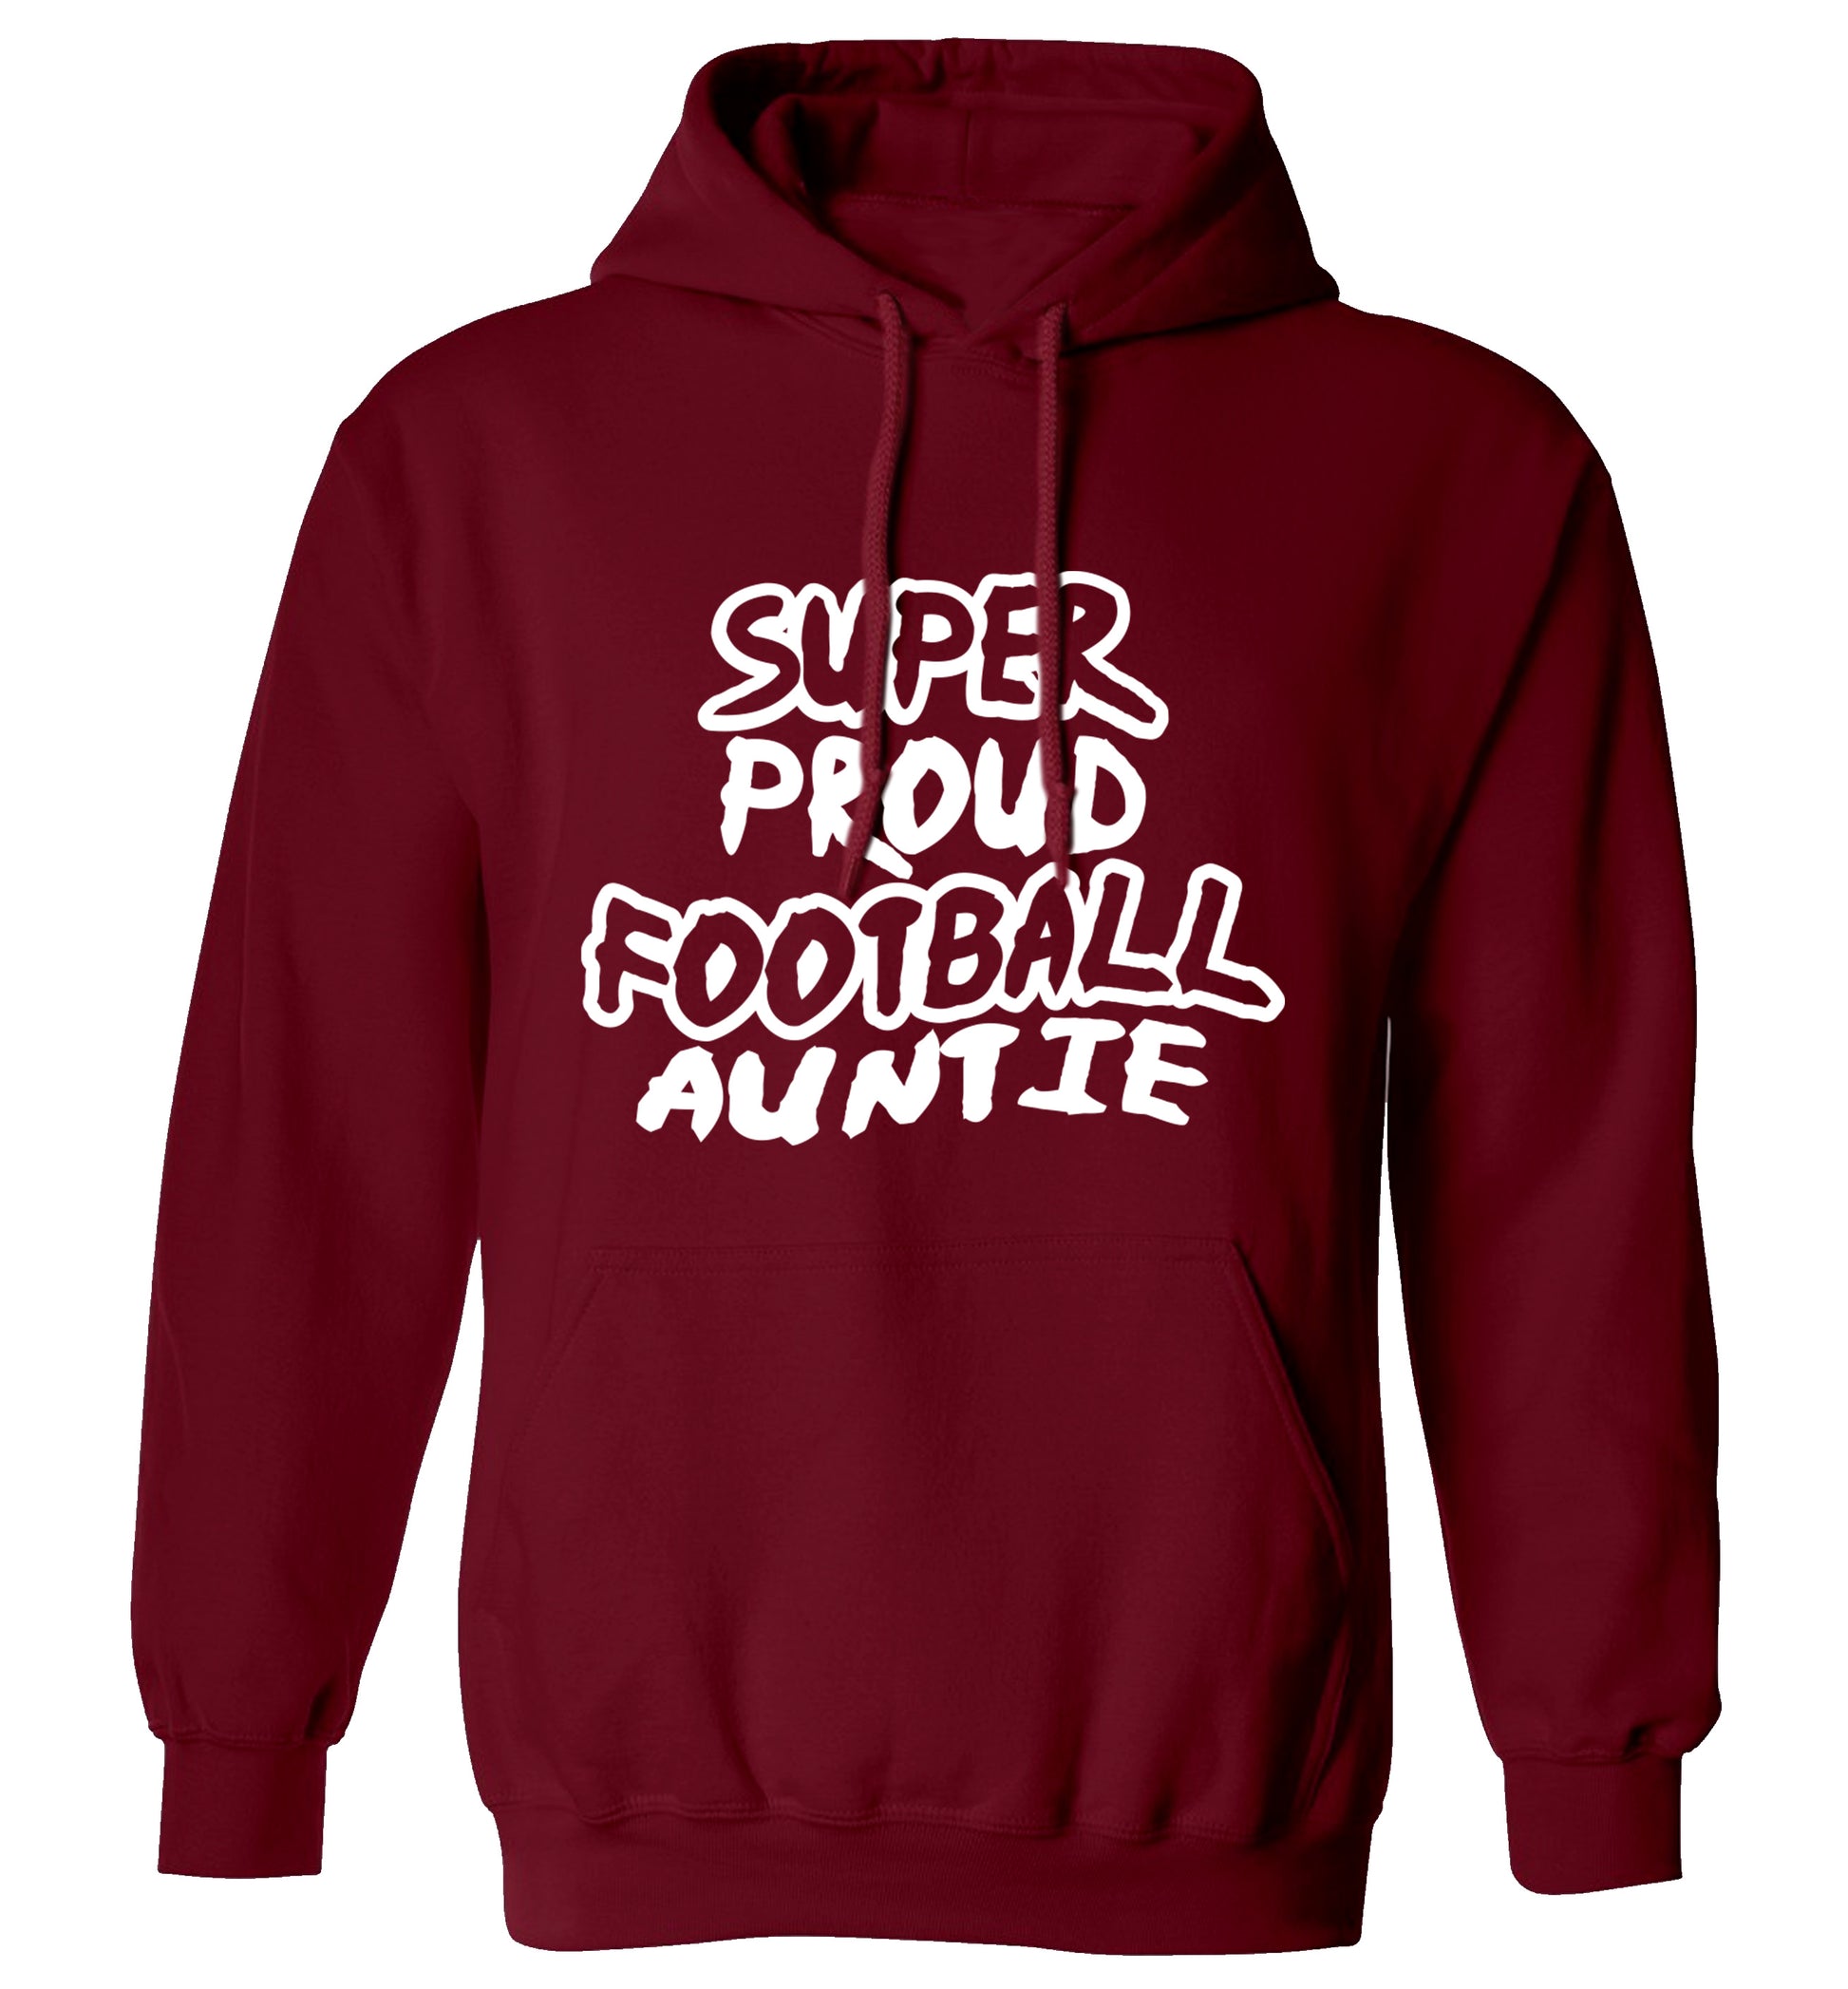 Super proud football auntie adults unisexmaroon hoodie 2XL